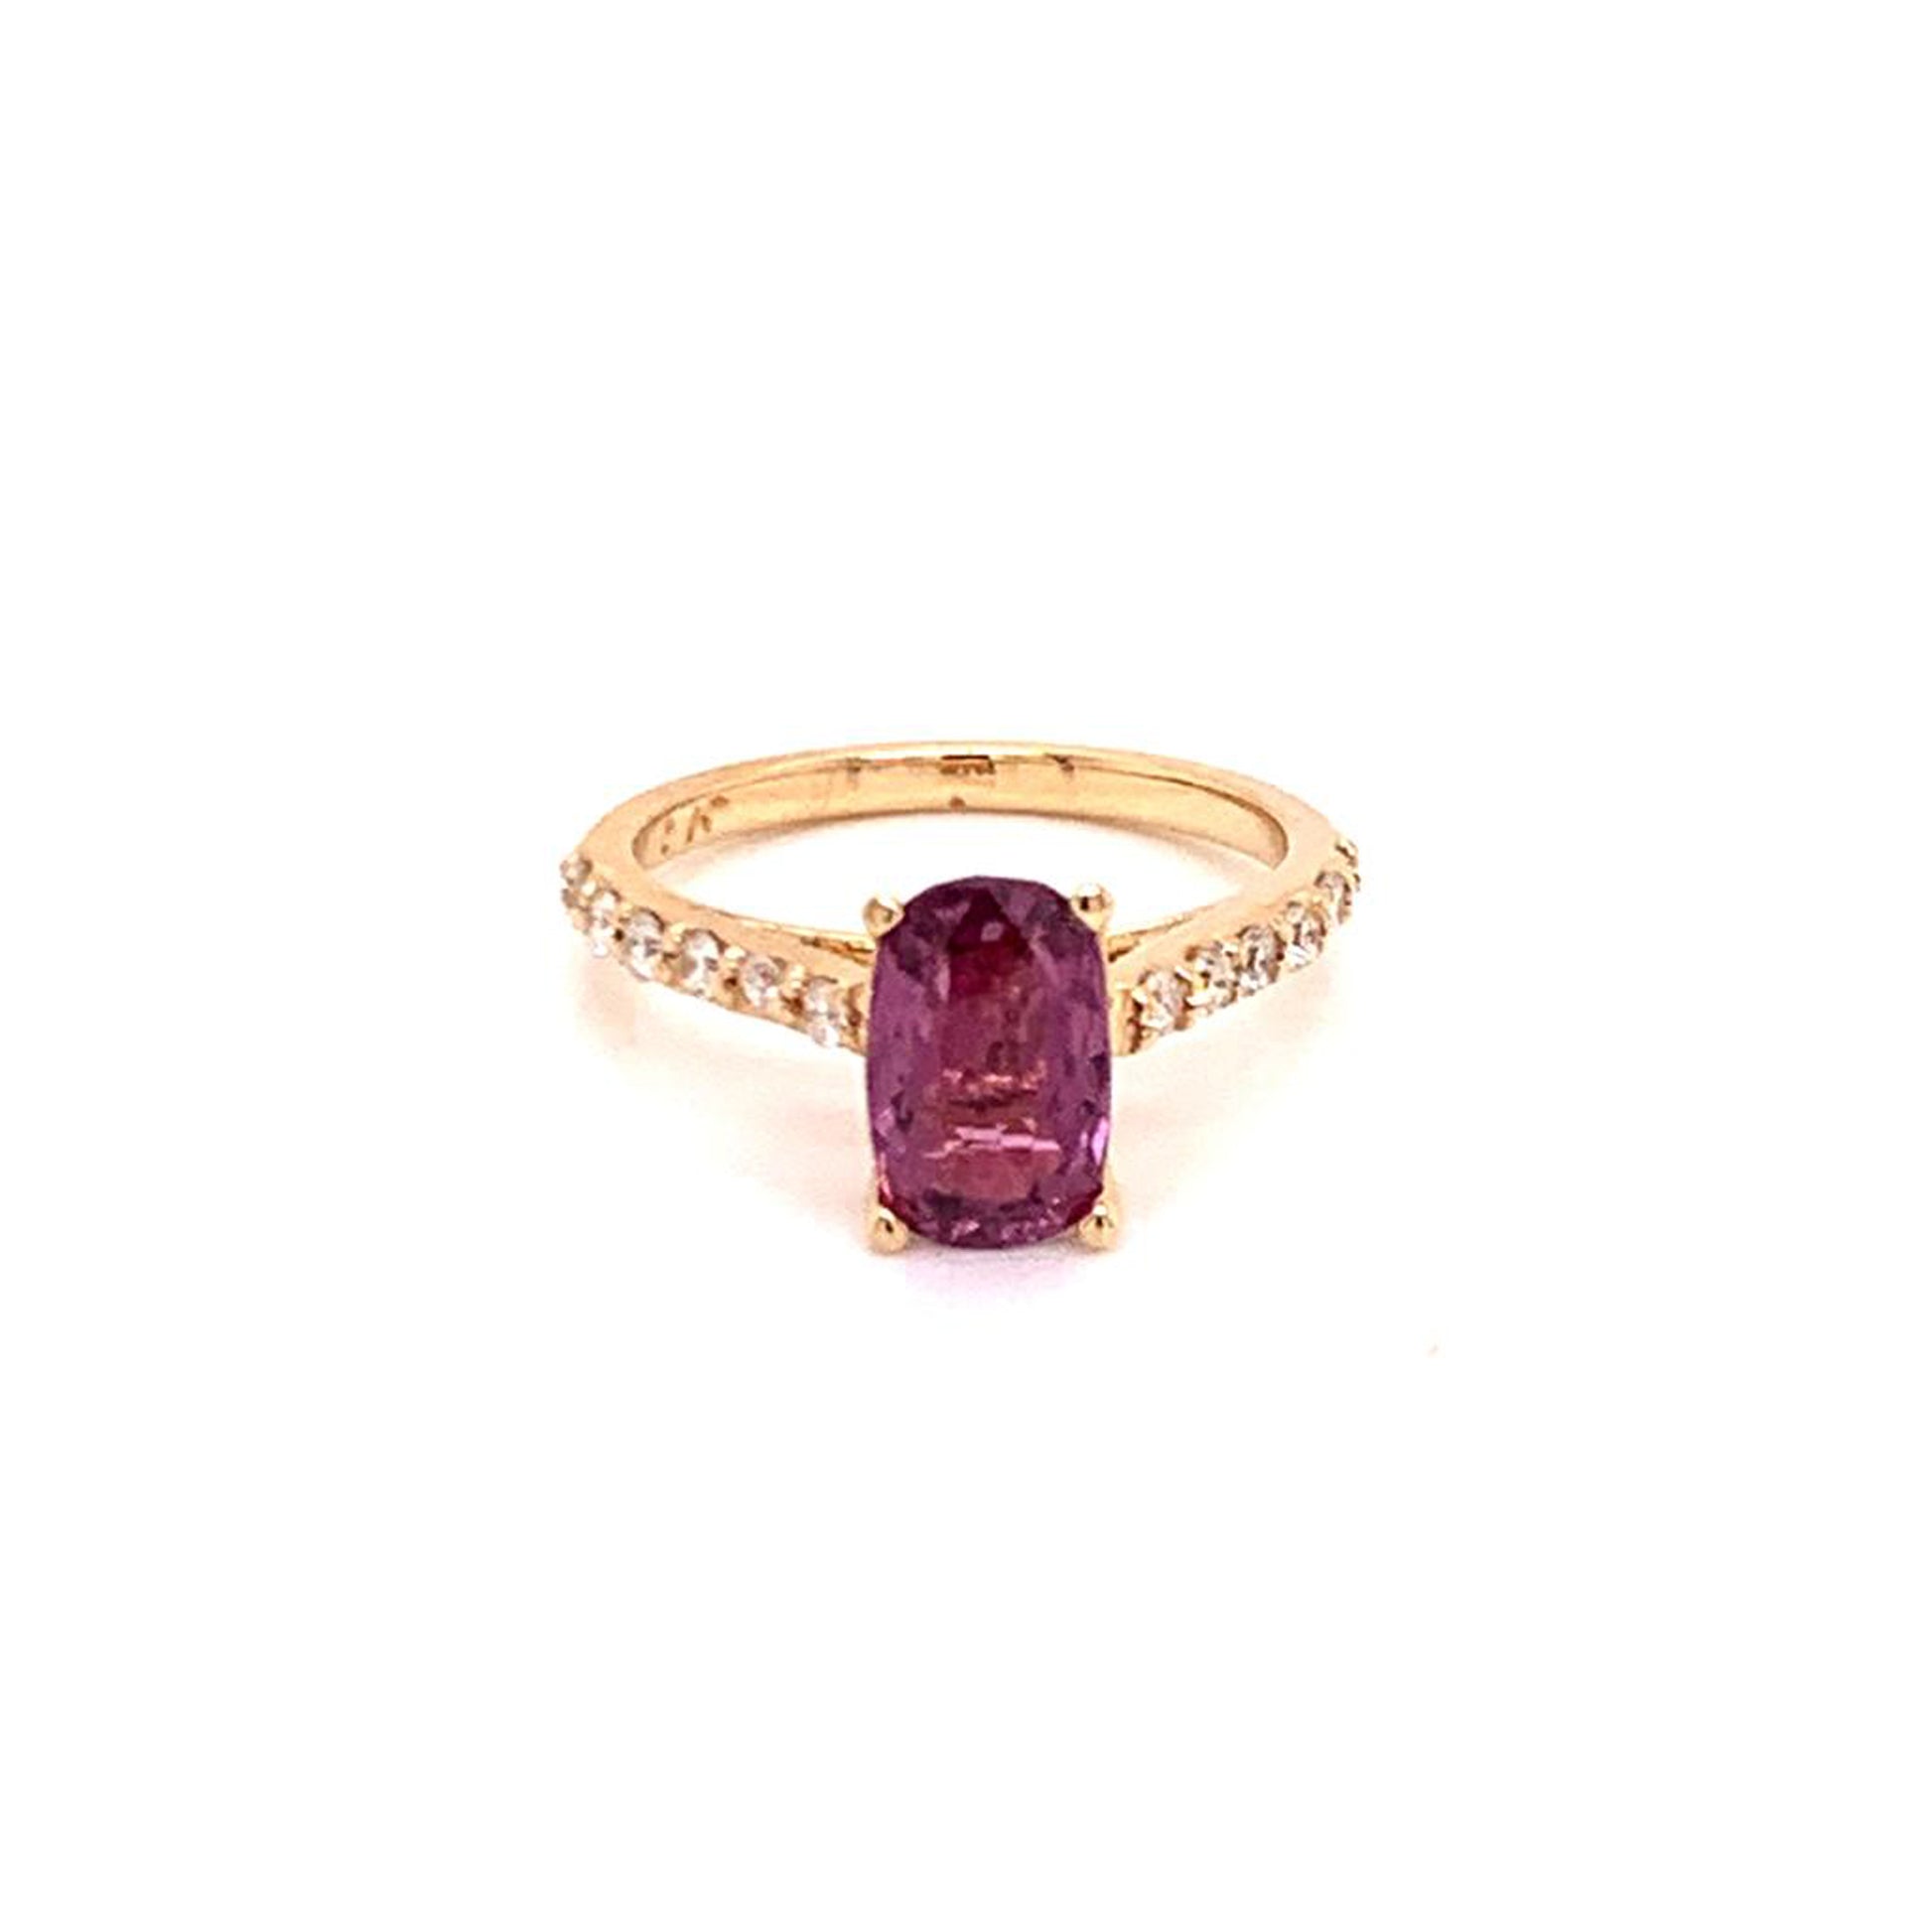 Diamond Purple Sapphire Ring 2 CT 14k Gold Certified $4,925 Women 915192 - Certified Estate Jewelry